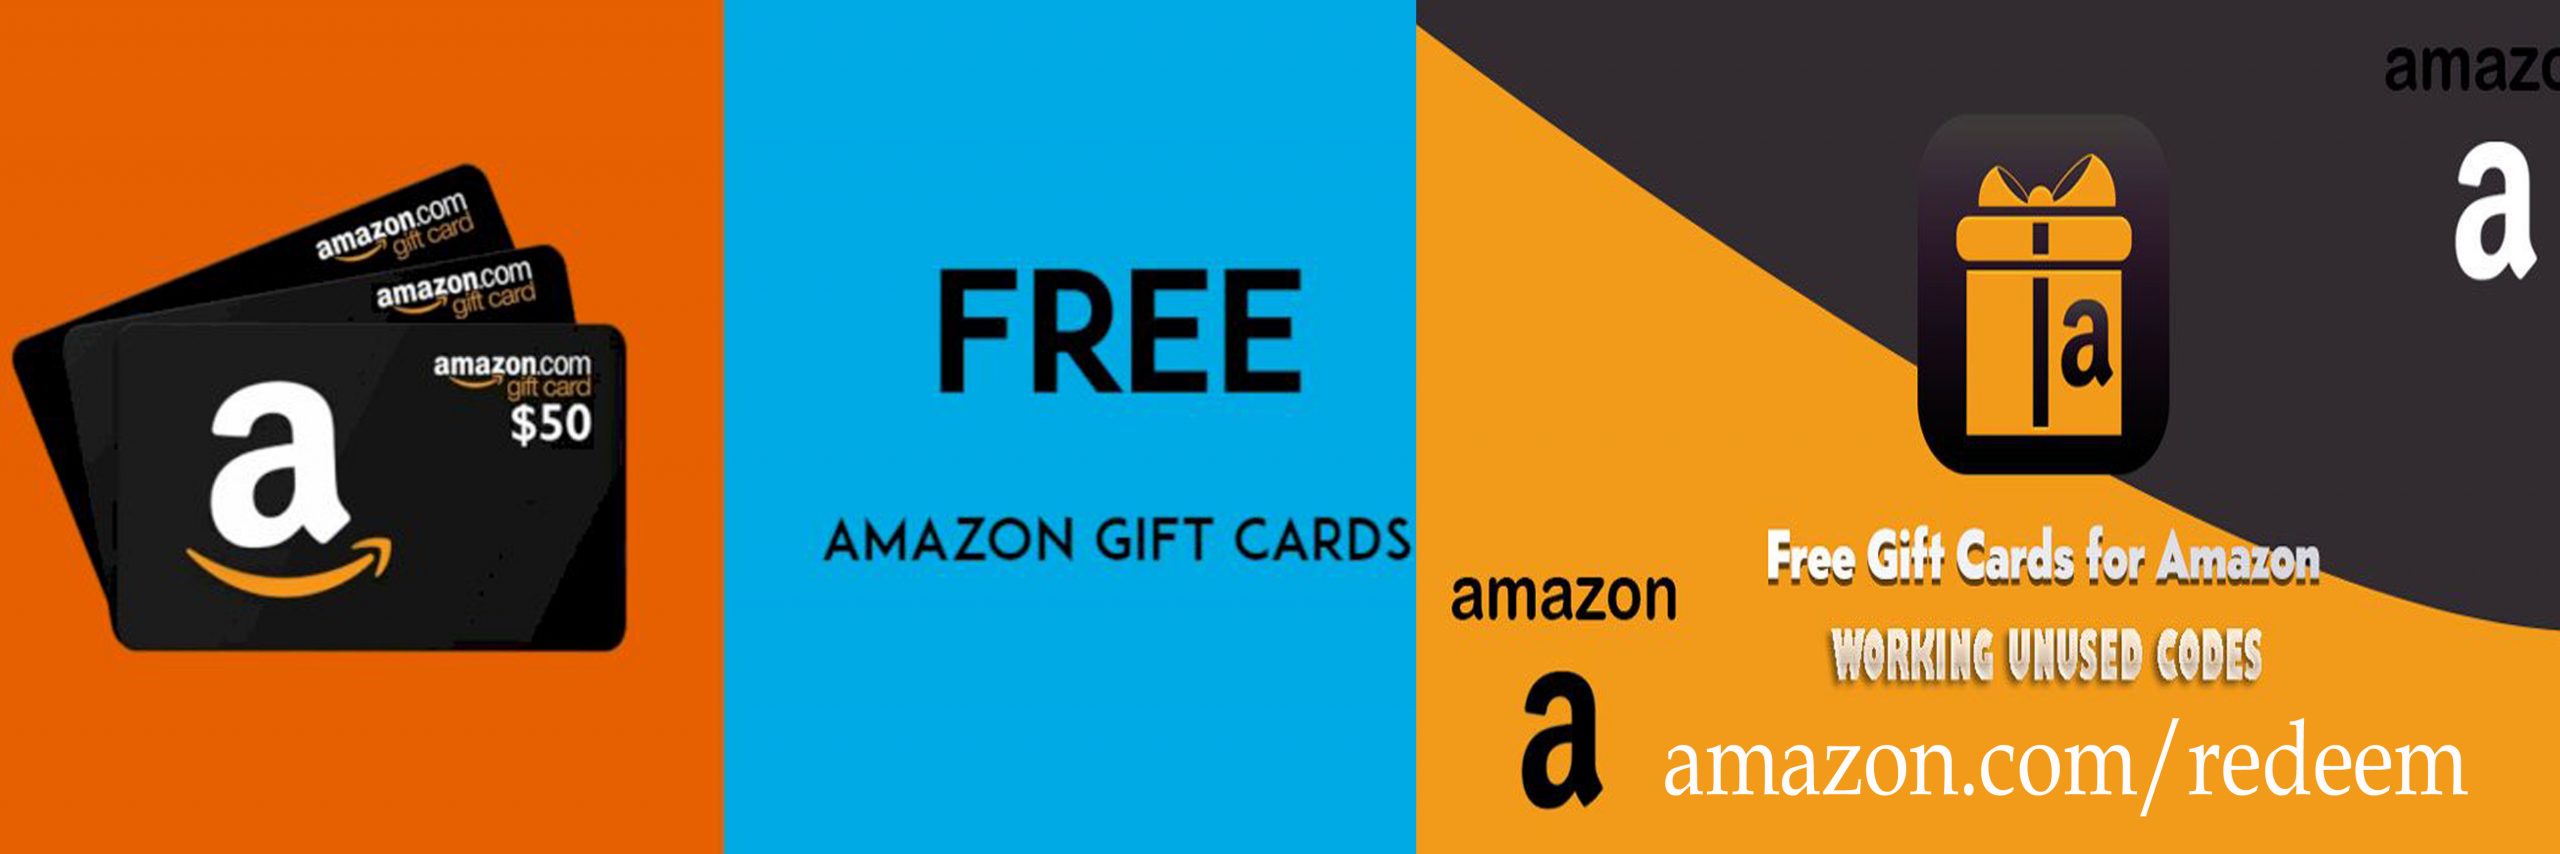 Amazon.com/Redeem | Enter Code Here to Redeem Amazon Gift Card